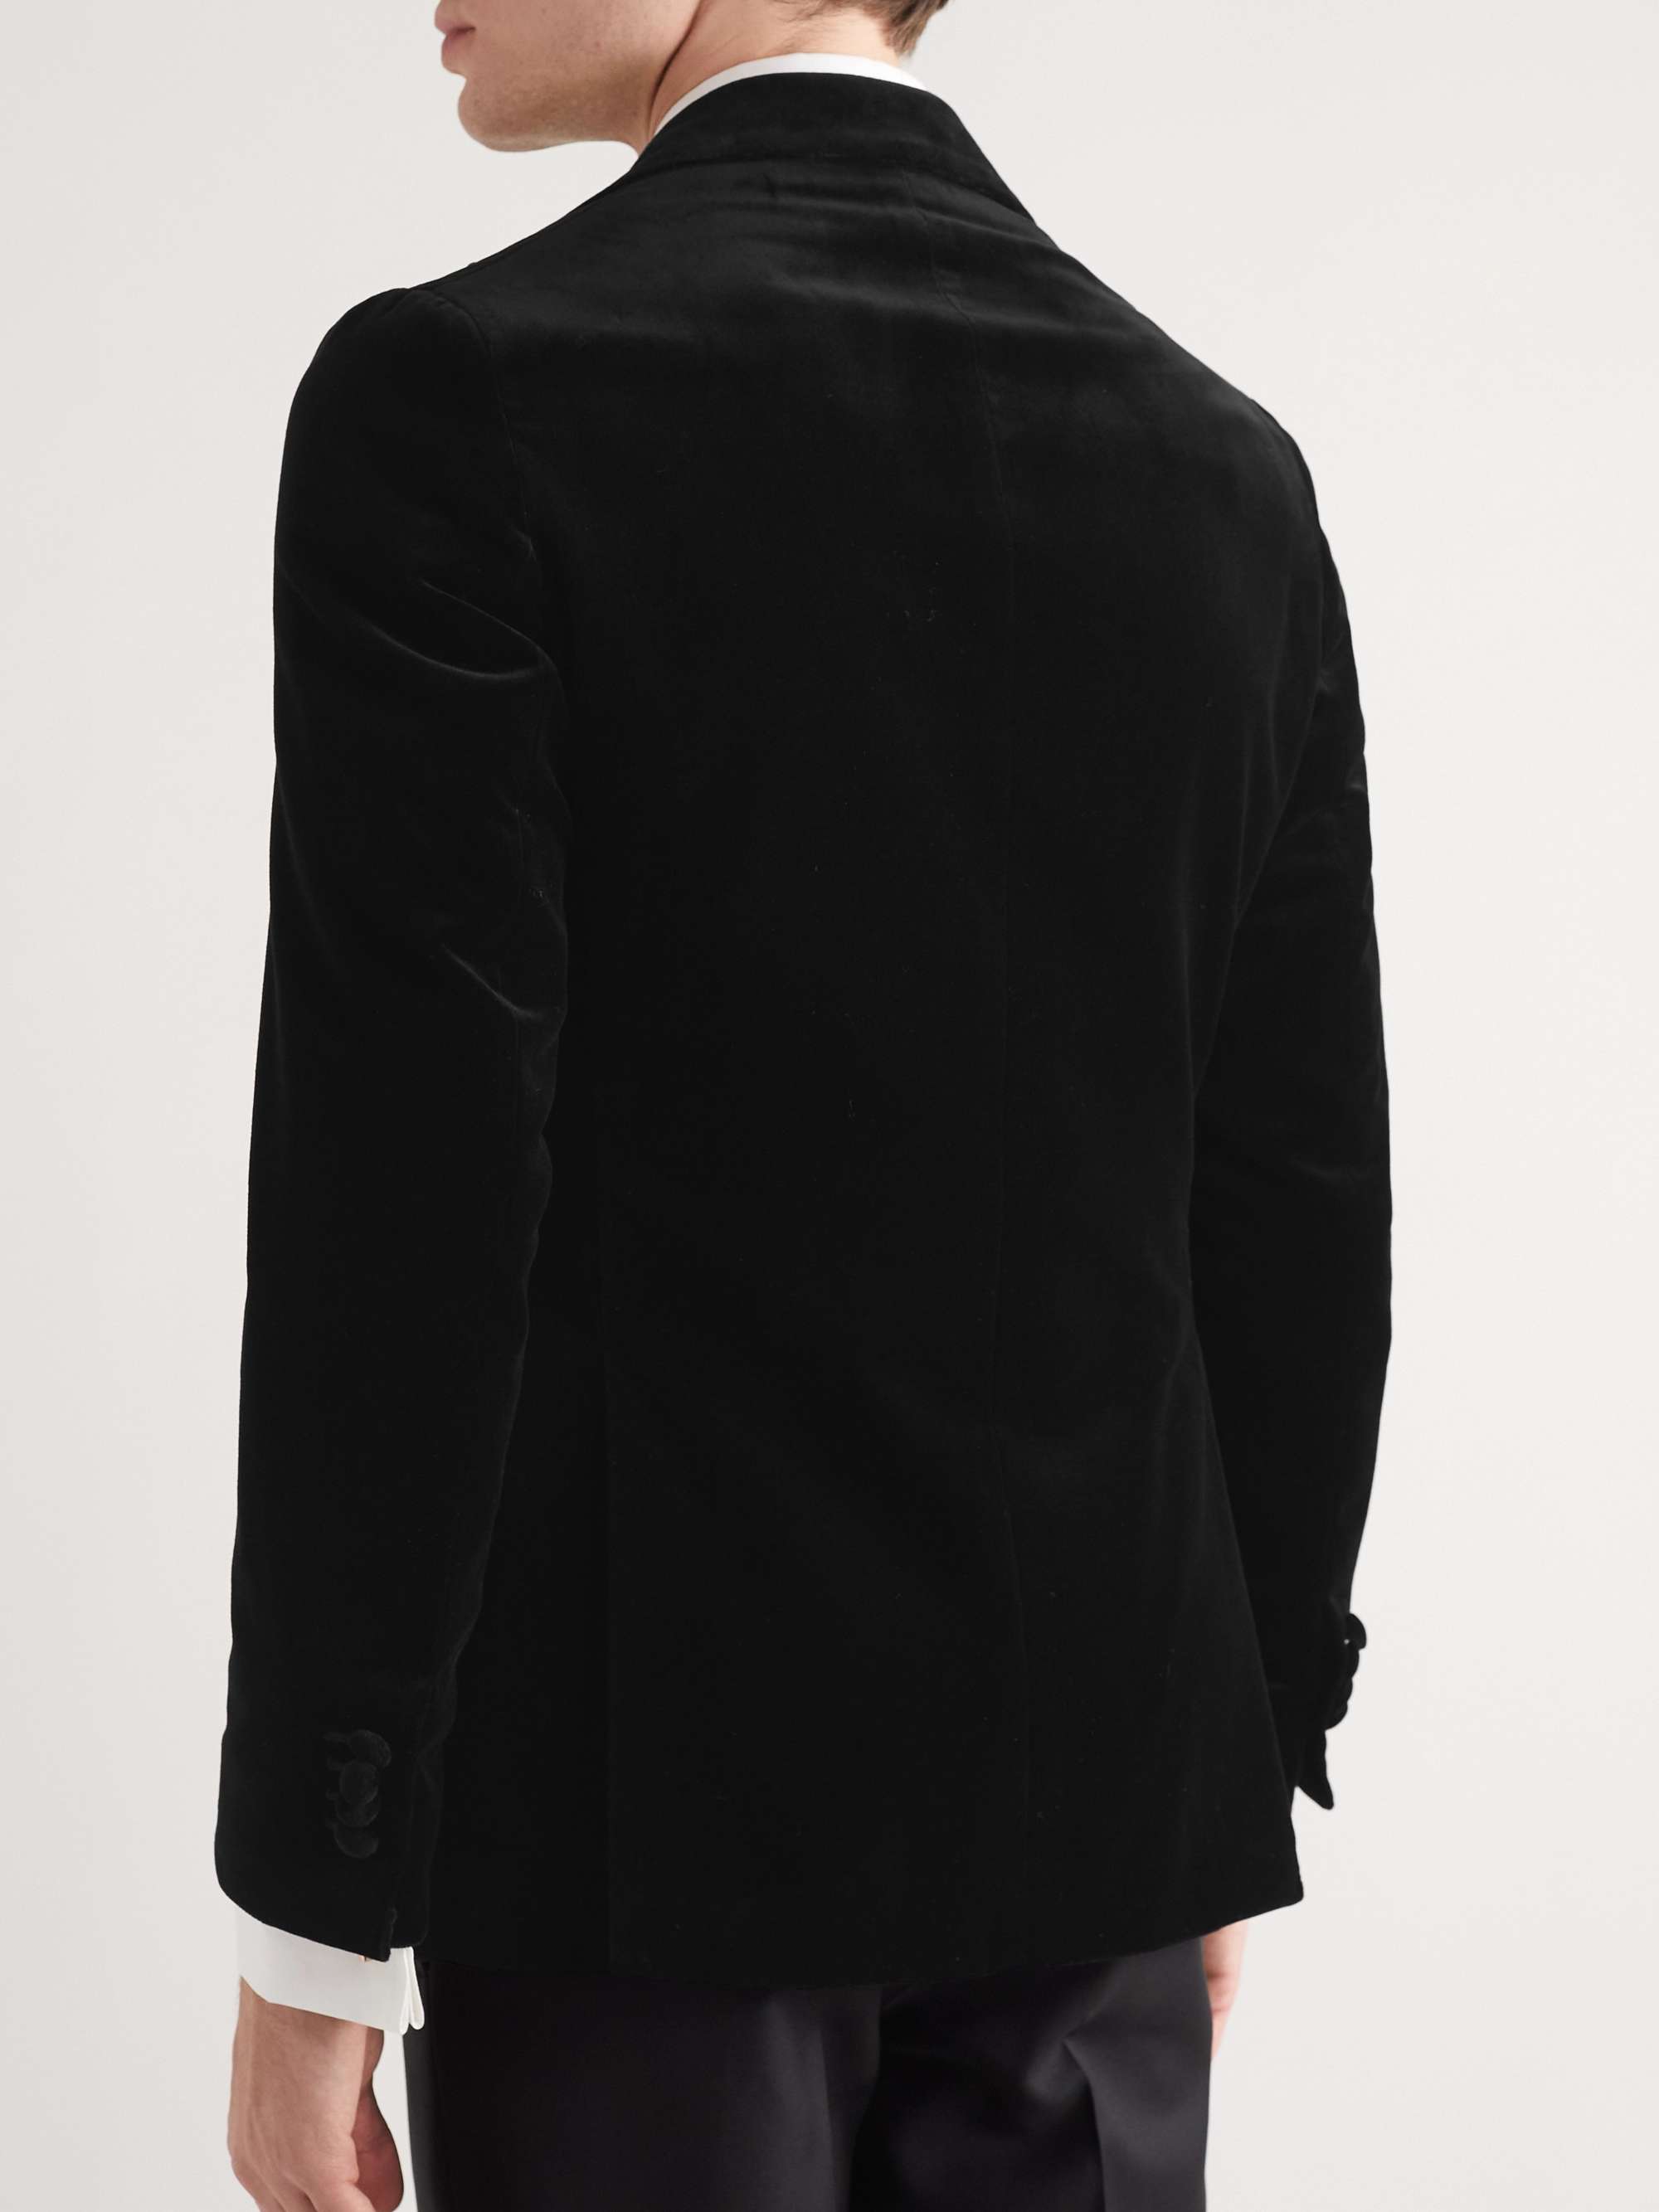 DE PETRILLO Cotton-Velvet Tuxedo Jacket